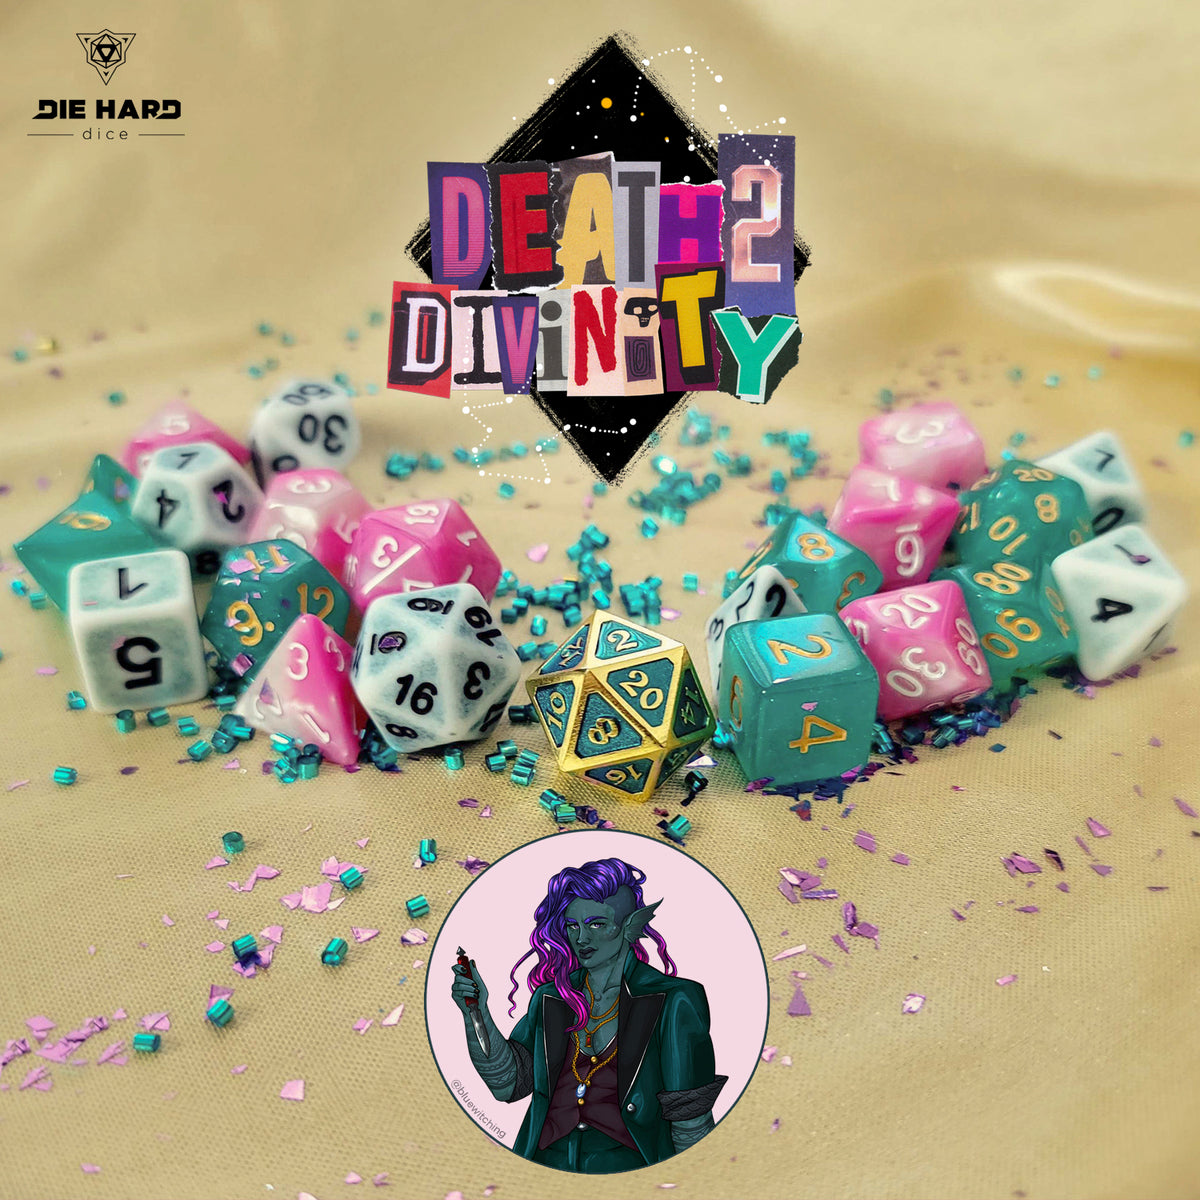 Ula-Charakterpalette – Death 2 Divinity x Die Hard Dice